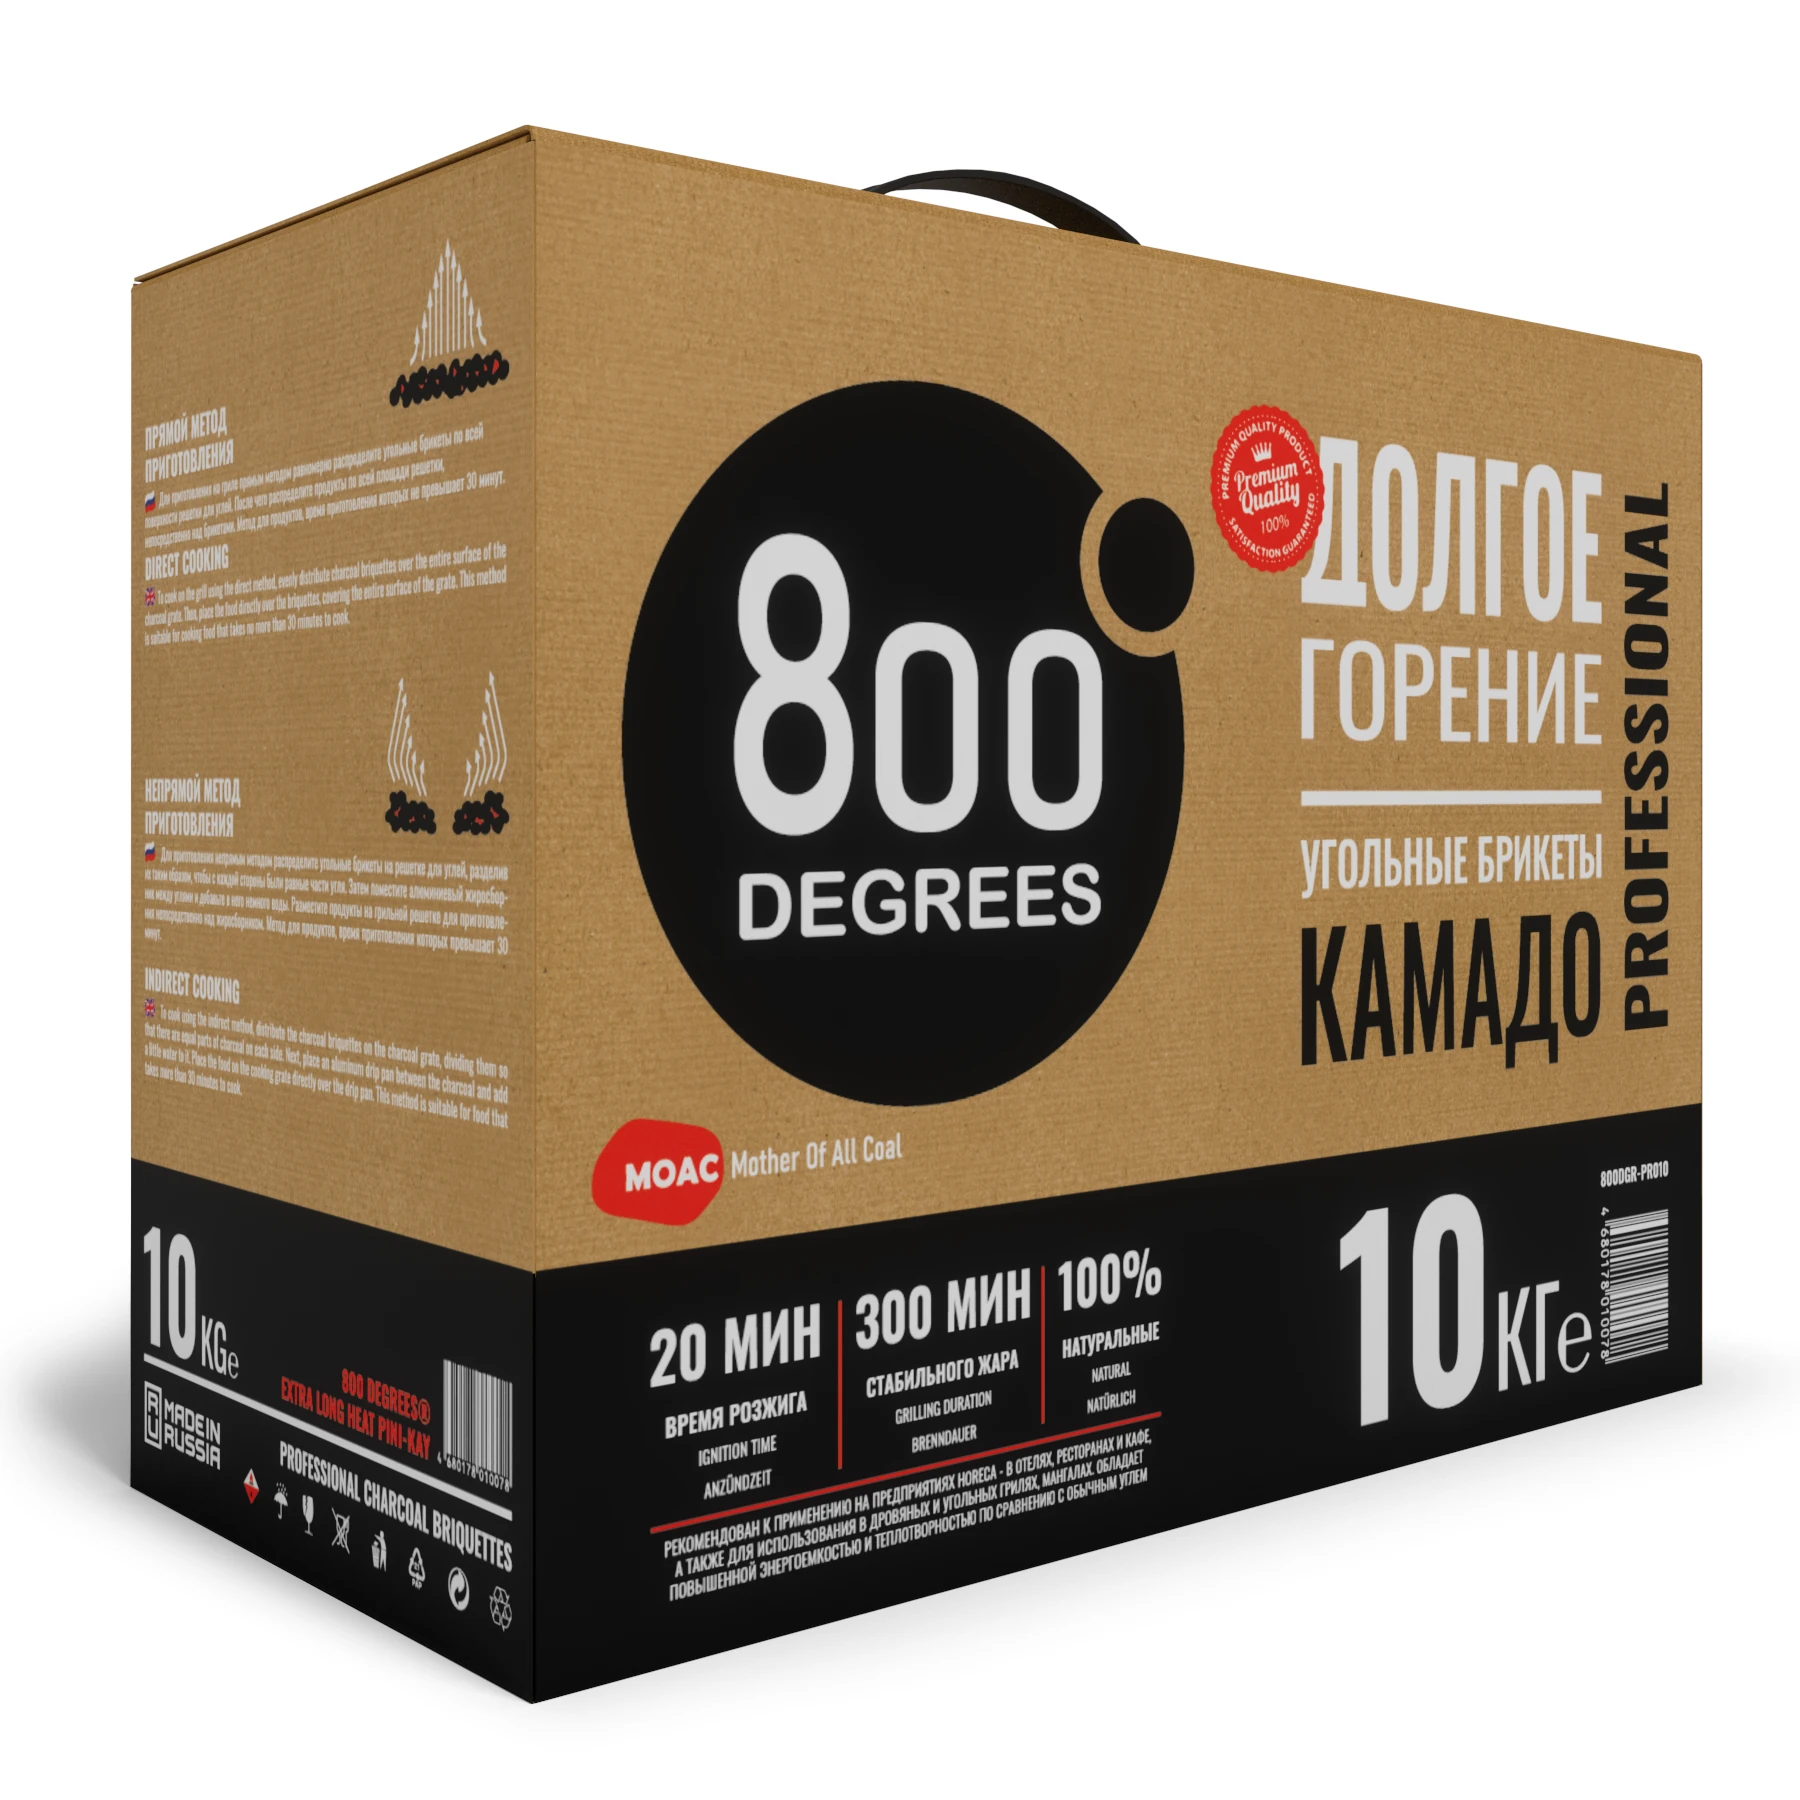 Угольные брикеты Камадо 800 Degrees Kamado Pini-Kay, коробка 10 кг